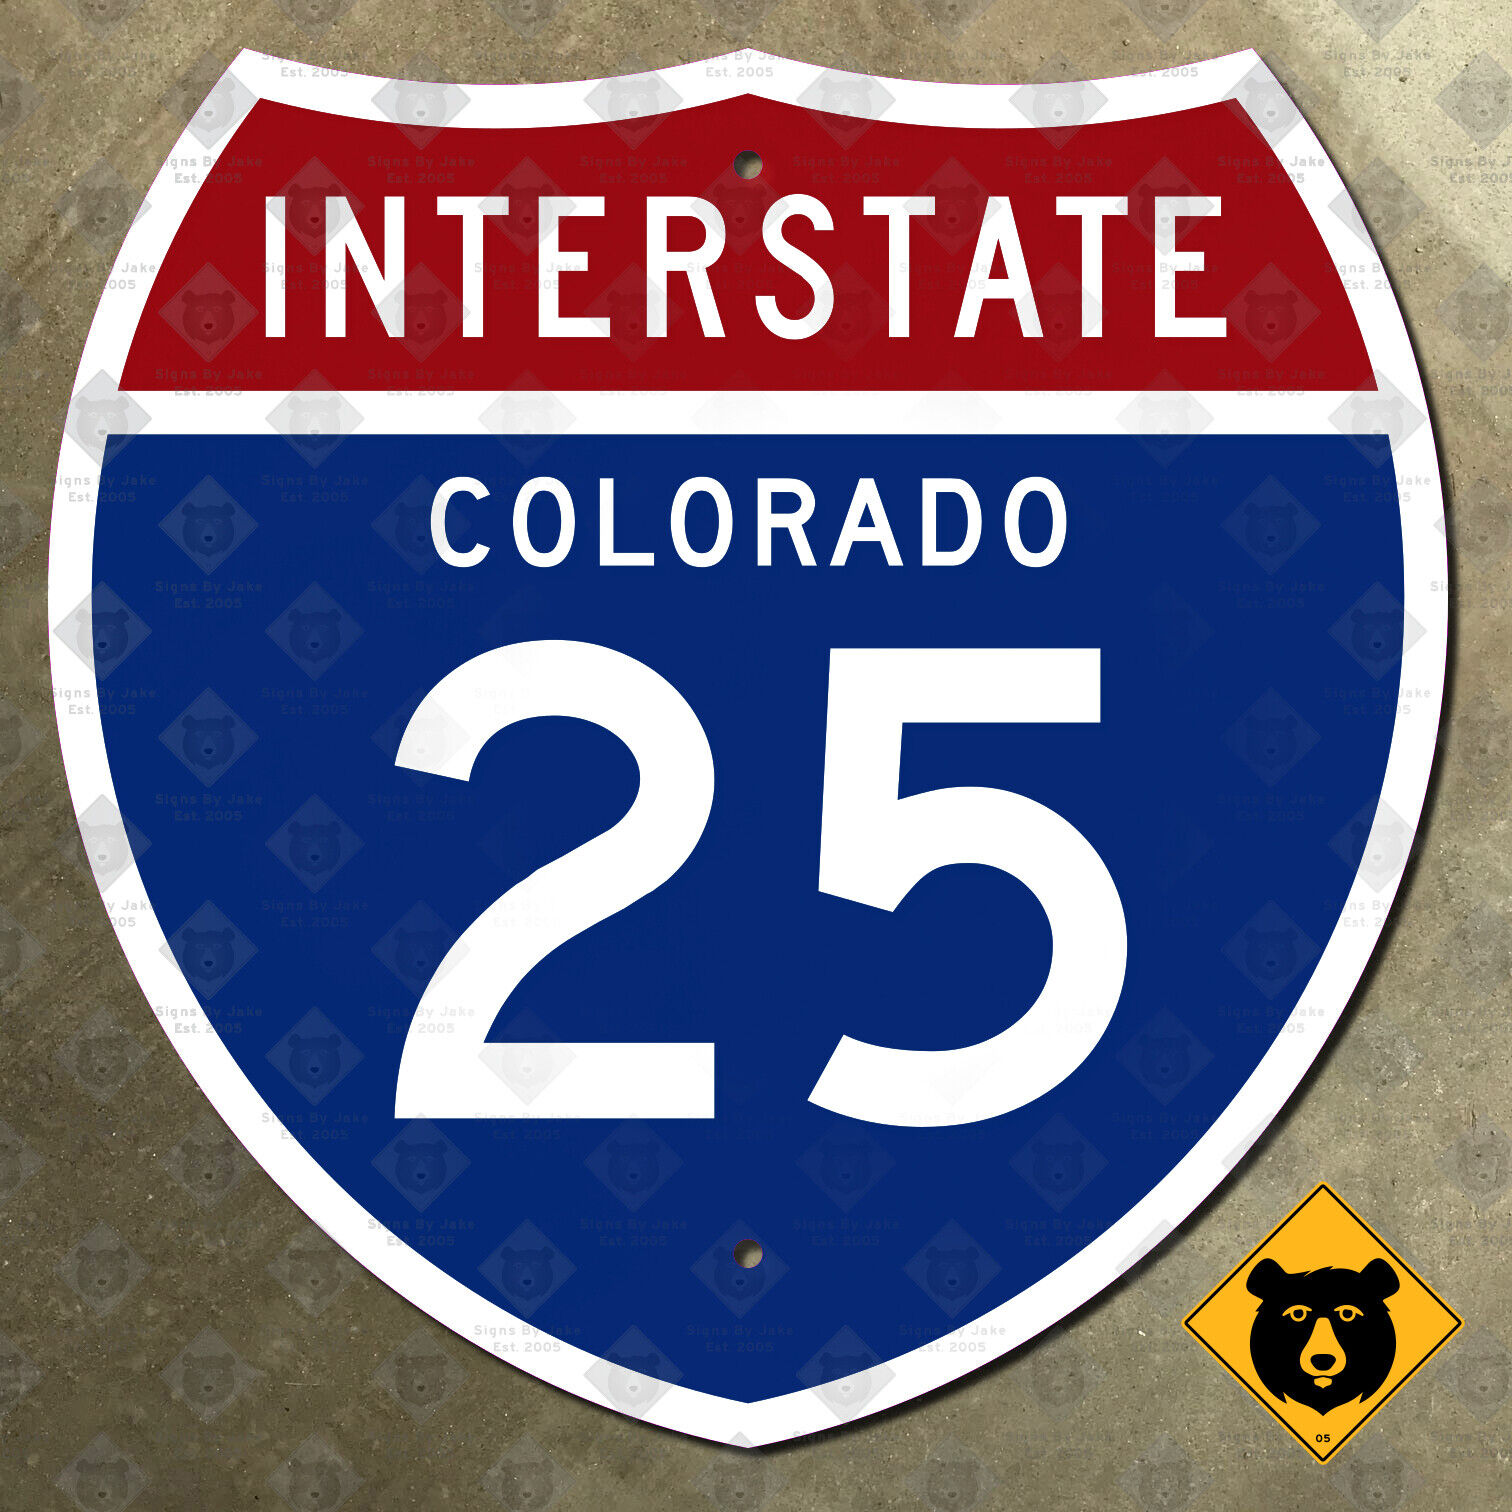 Colorado Interstate 25 highway route sign 1957 Springs Denver 12x12